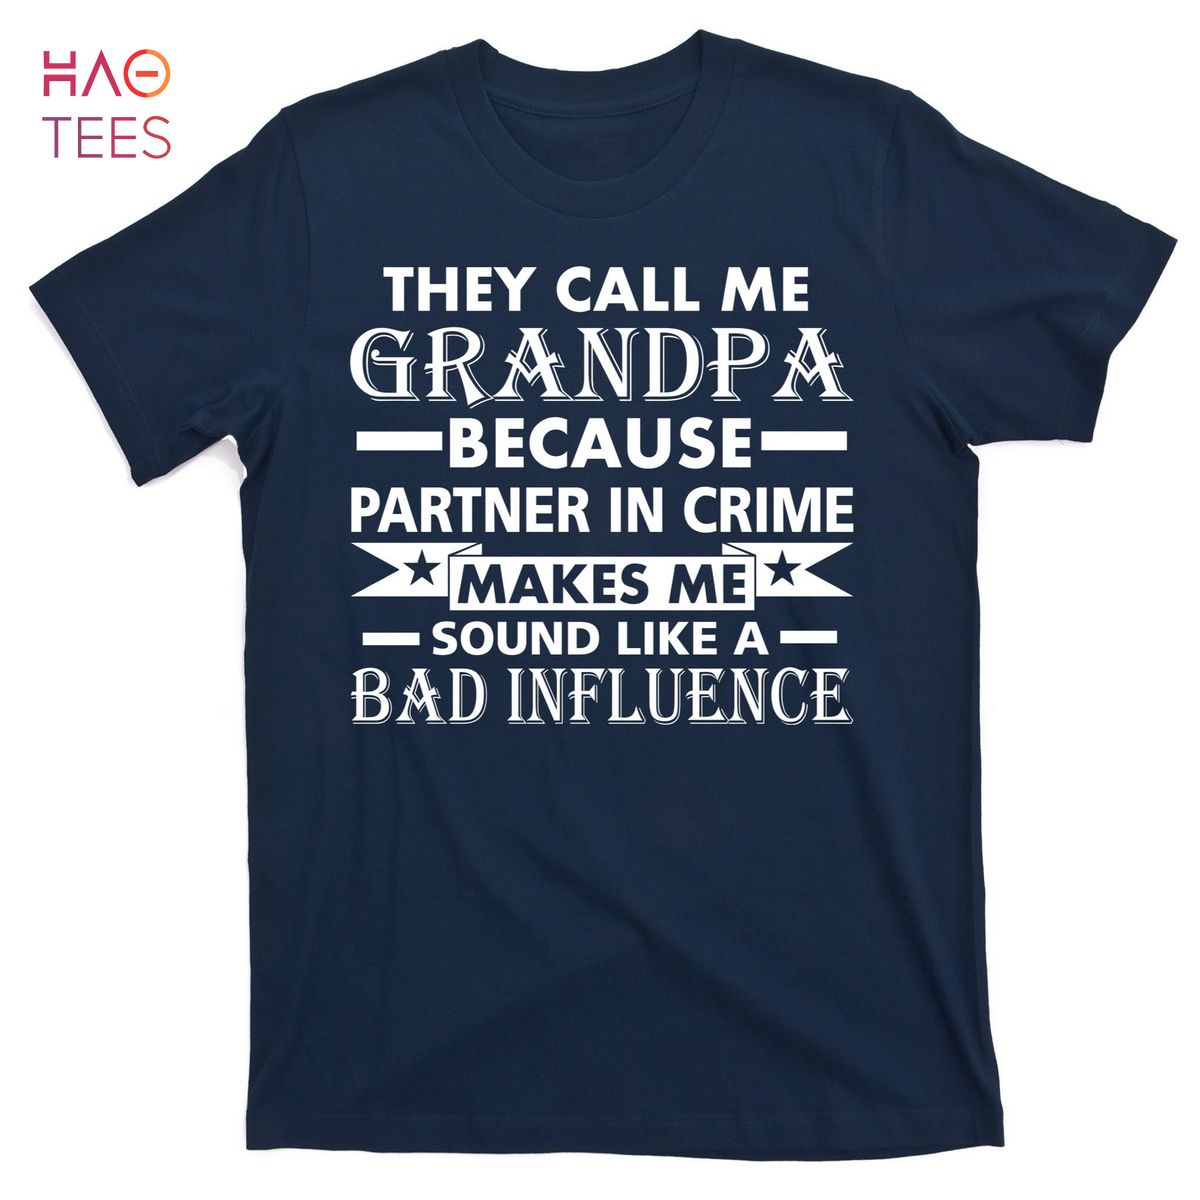 HOT Funny Grandpa Grandfather T-Shirts